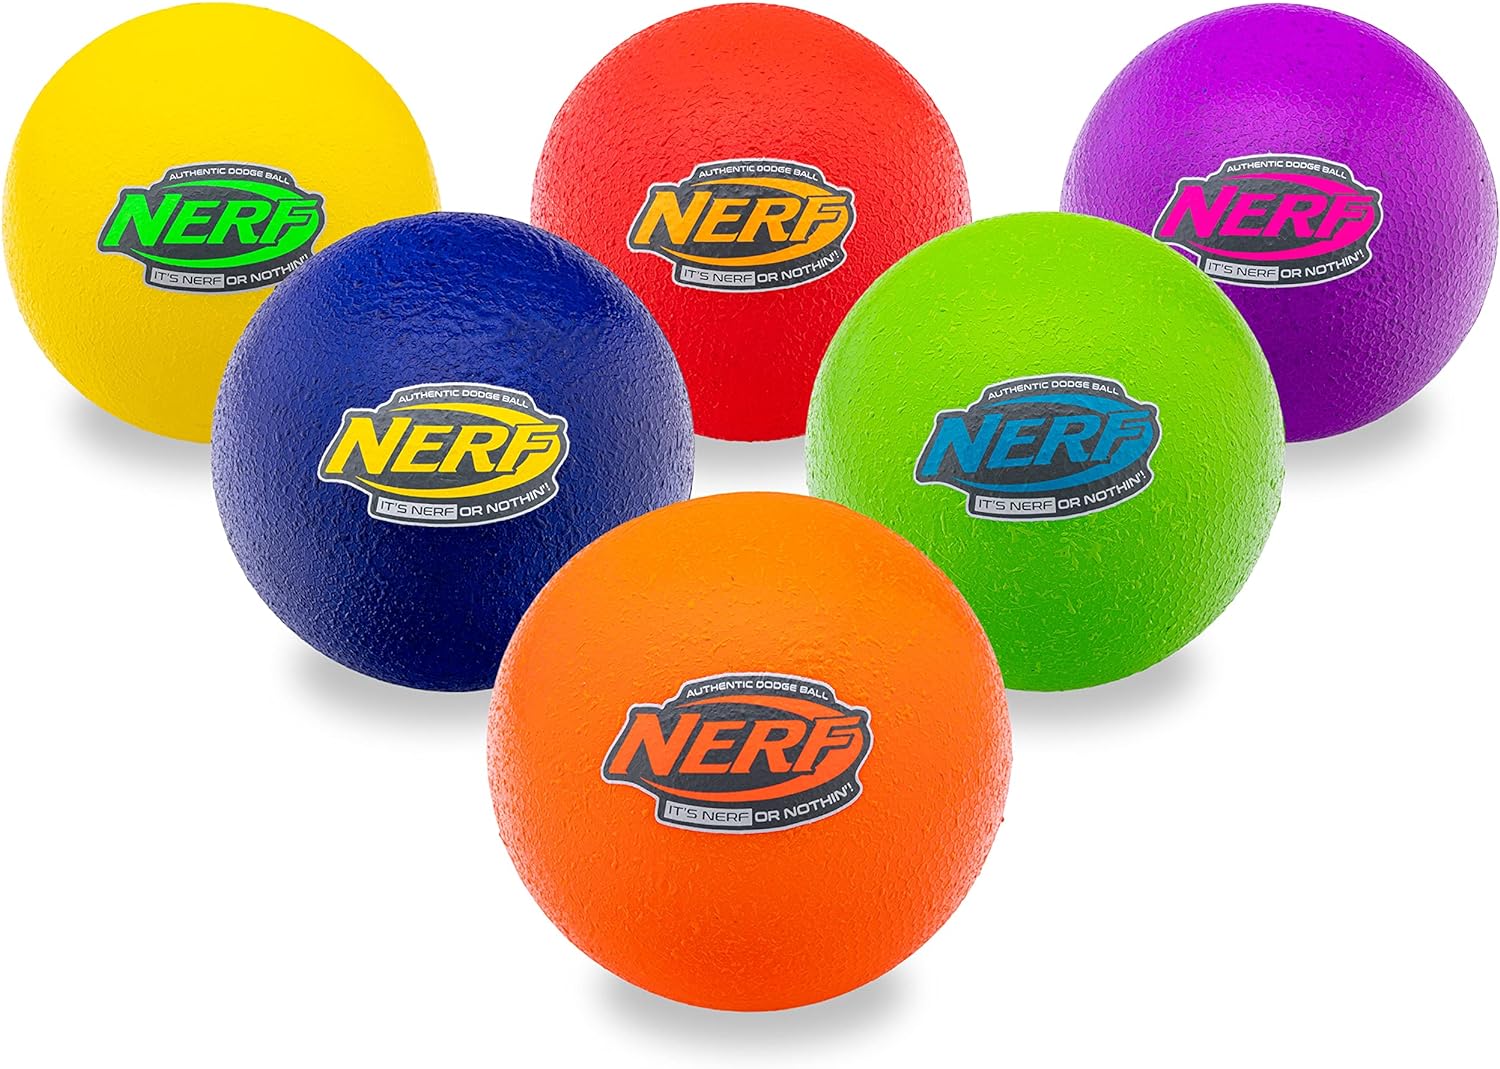 NERF Proshot Dodgeball - 6 Foam Dodgeball - Super Soft Foam Great for All Ages- 6 Pack of Assorted Colors